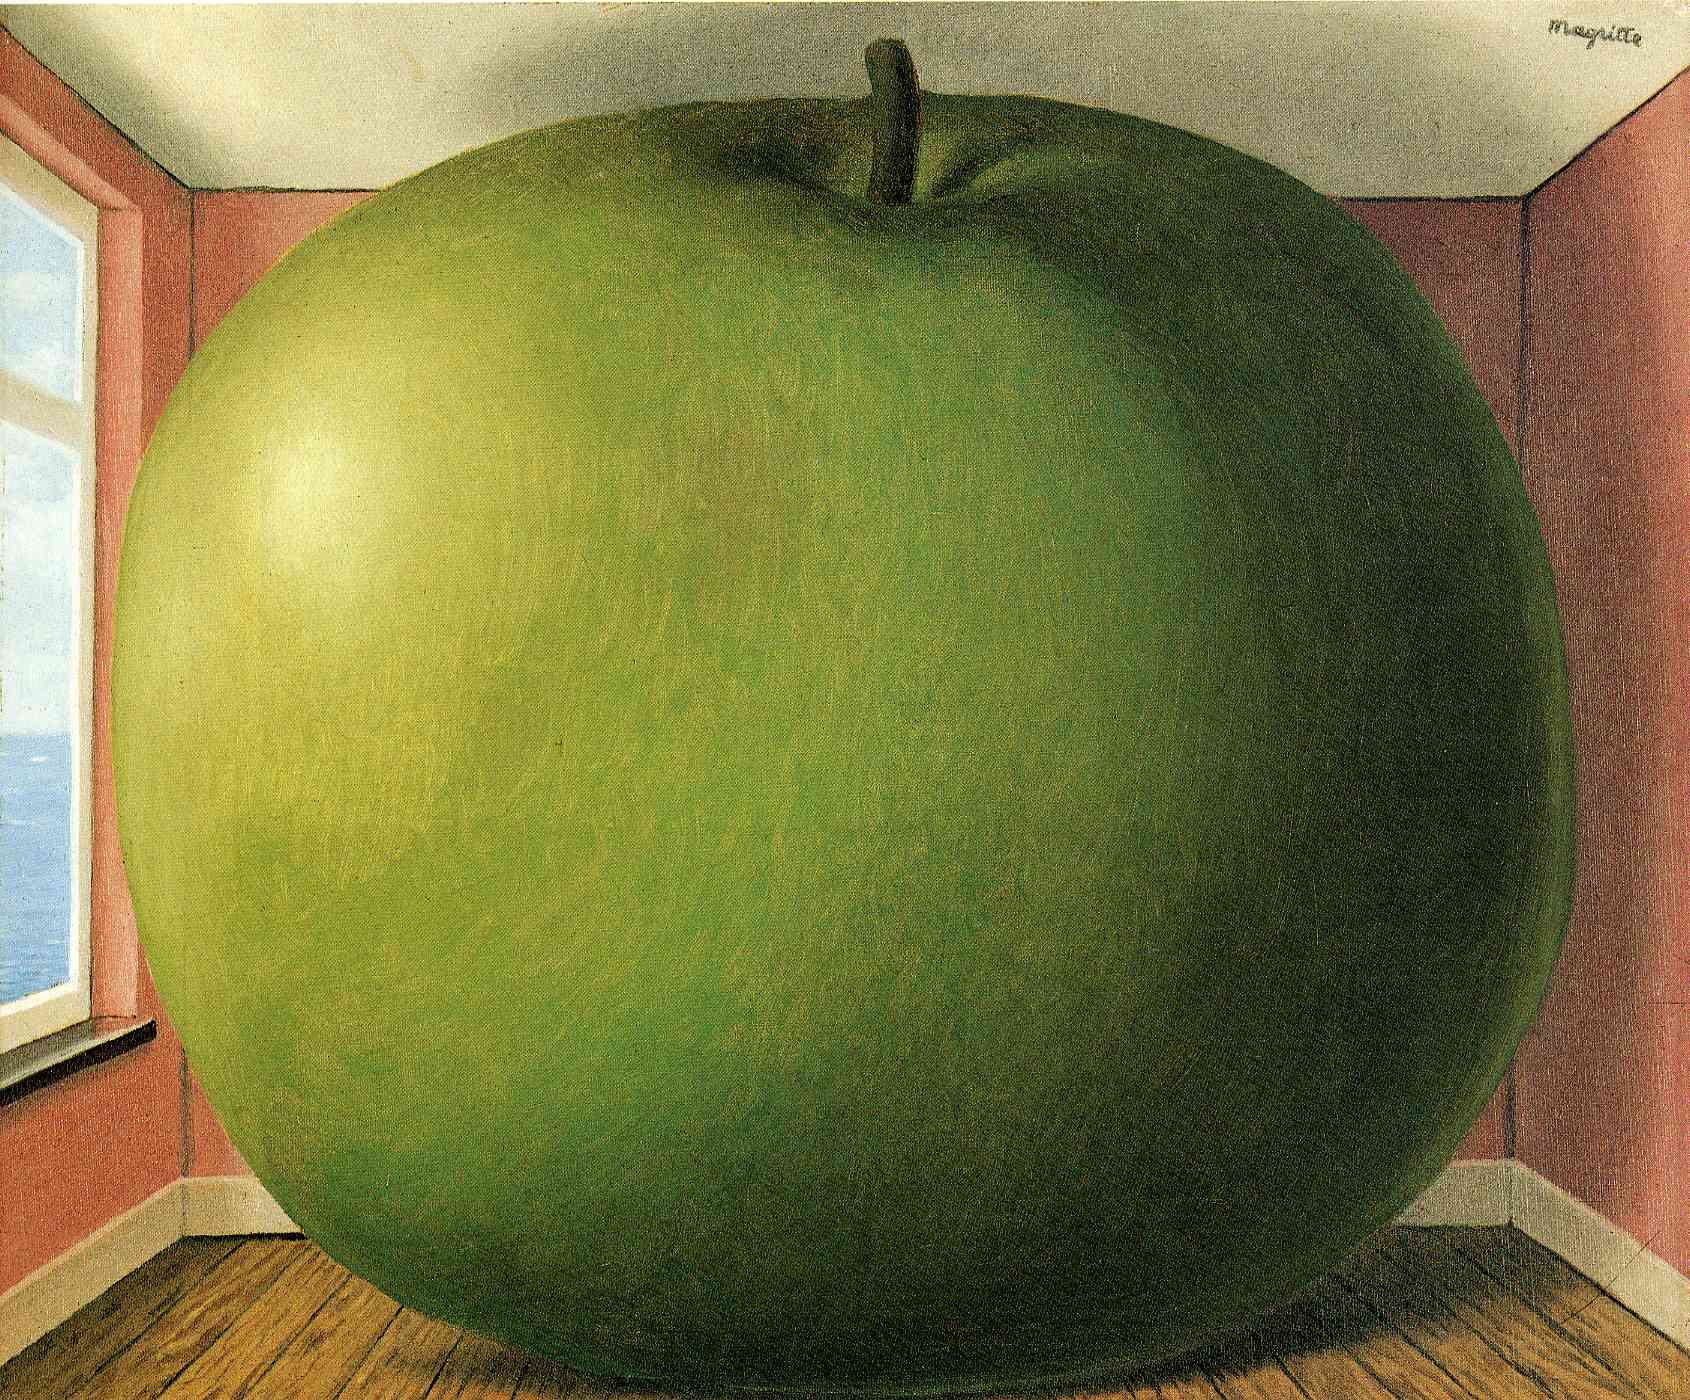 Dinleme Odası  by René Magritte - 1952 - 55 x 45 cm 